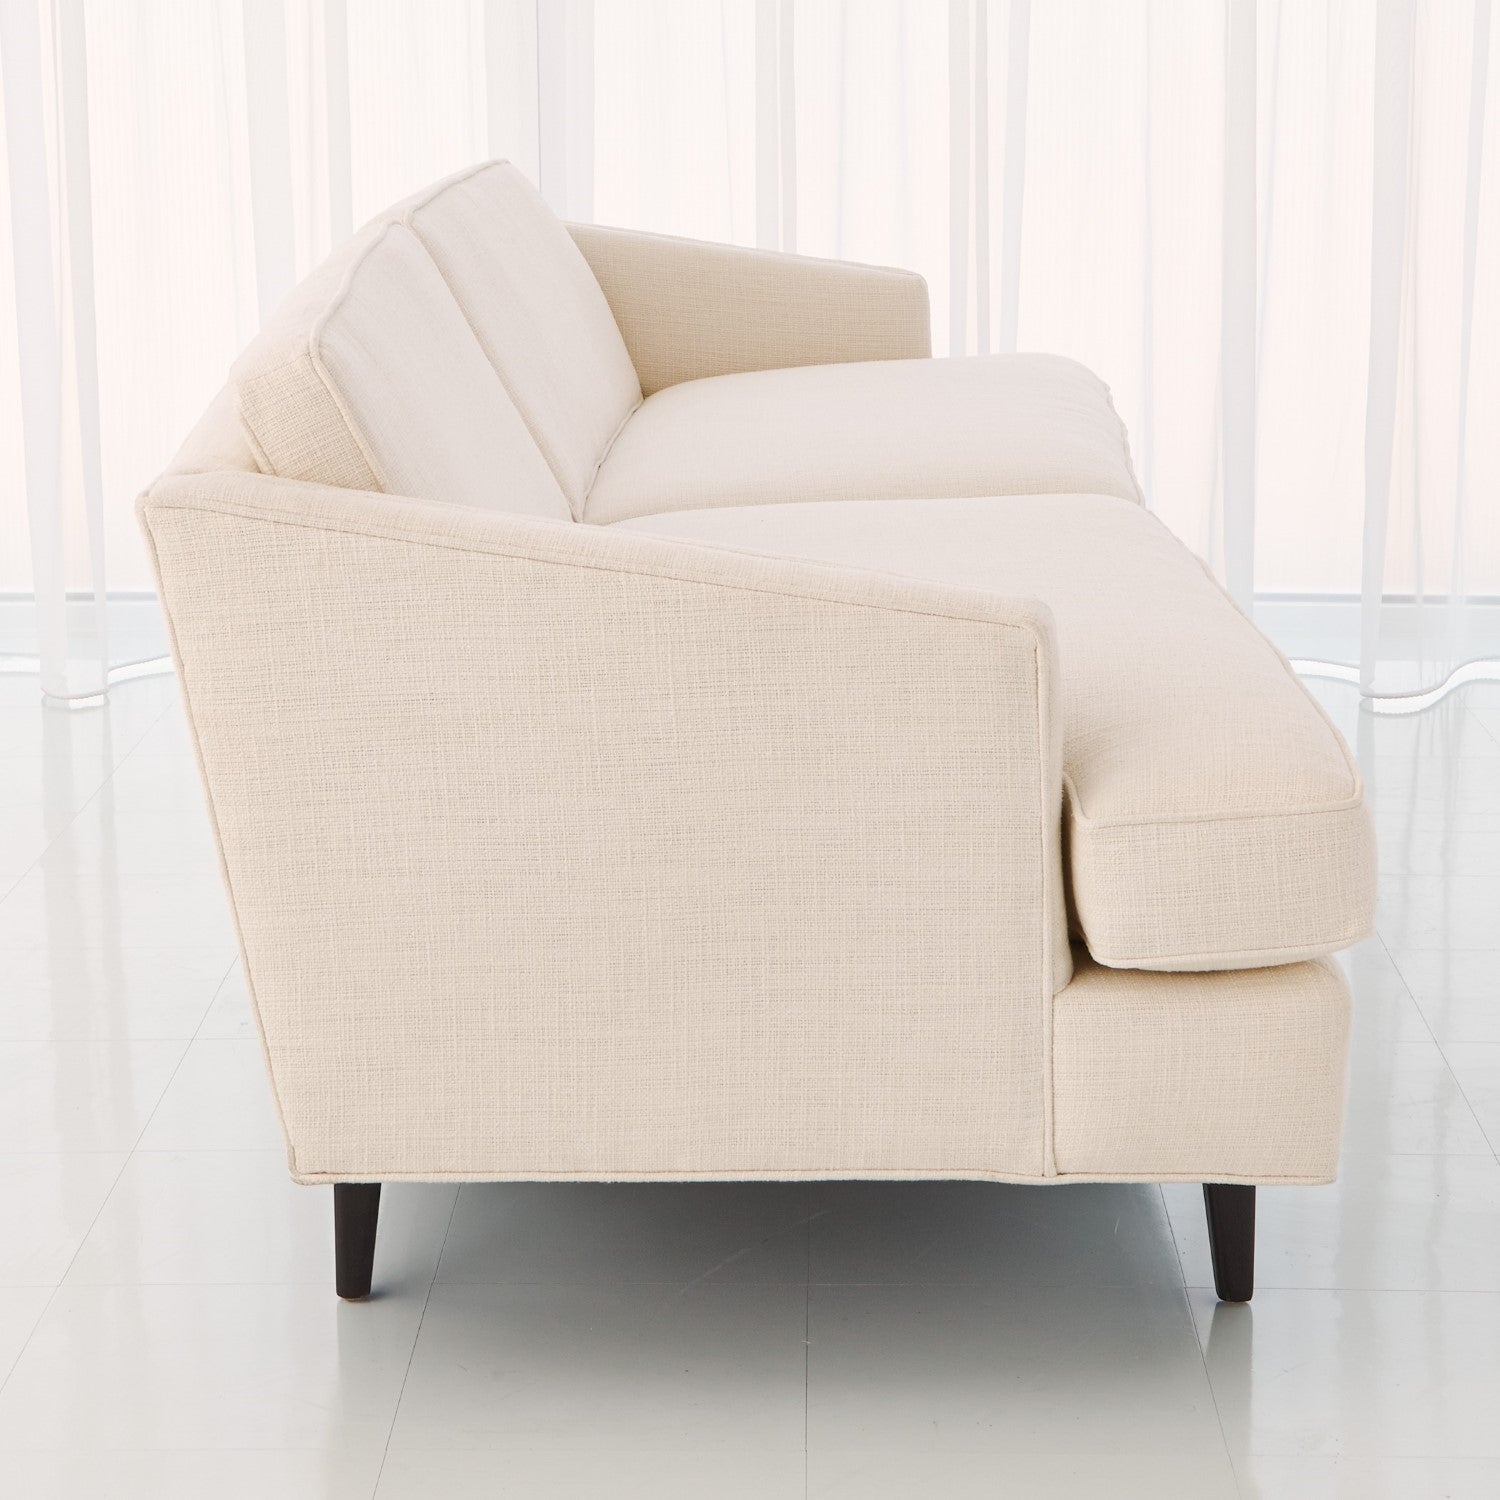 Crescent 90" Sofa - Avada Ivory - Grats Decor Interior Design & Build Inc.